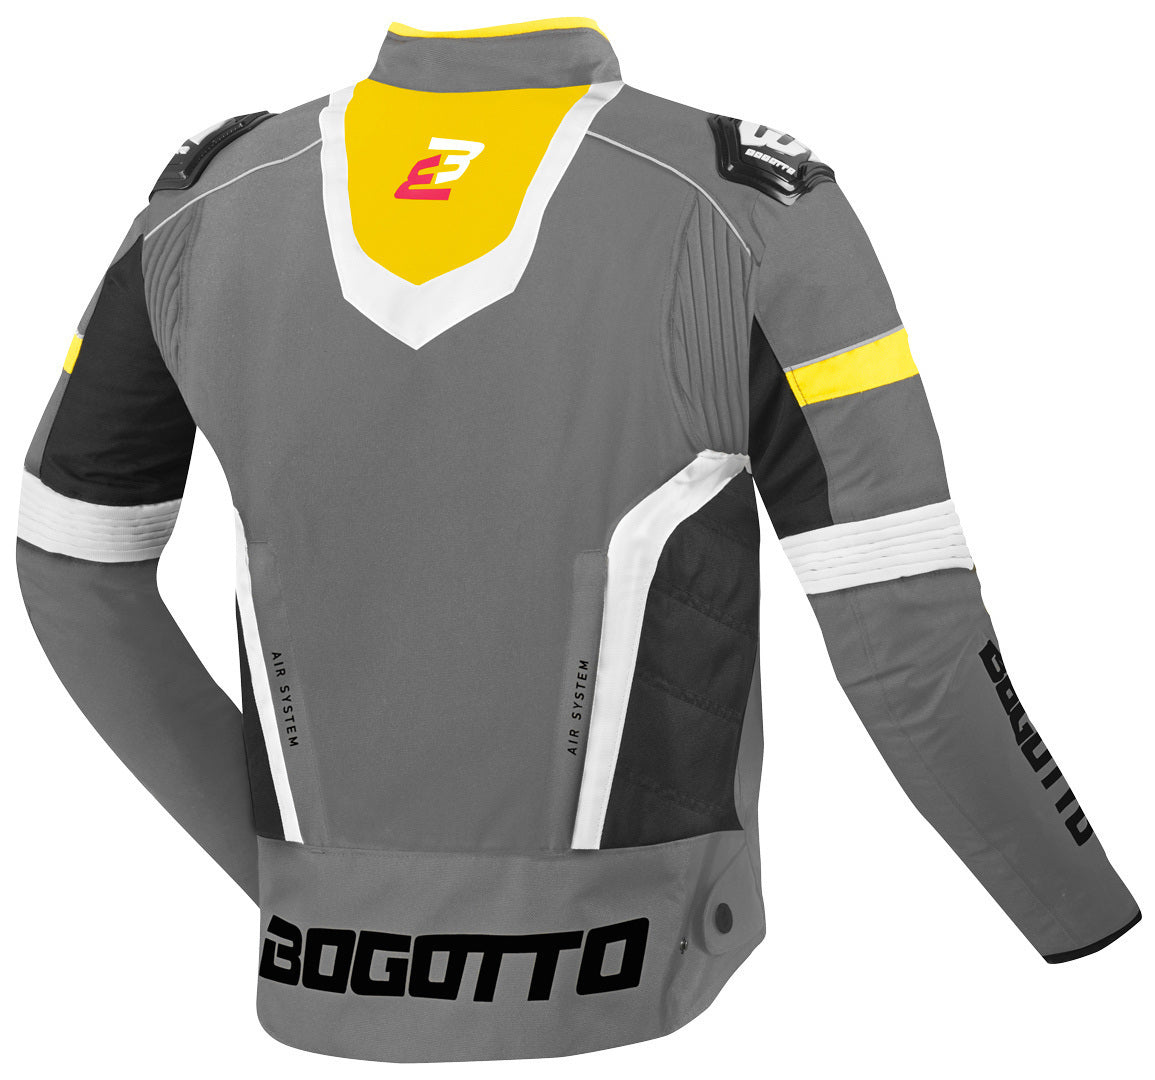 Bogotto Boomerang waterproof Motorcycle Textile Jacket#color_grey-yellow